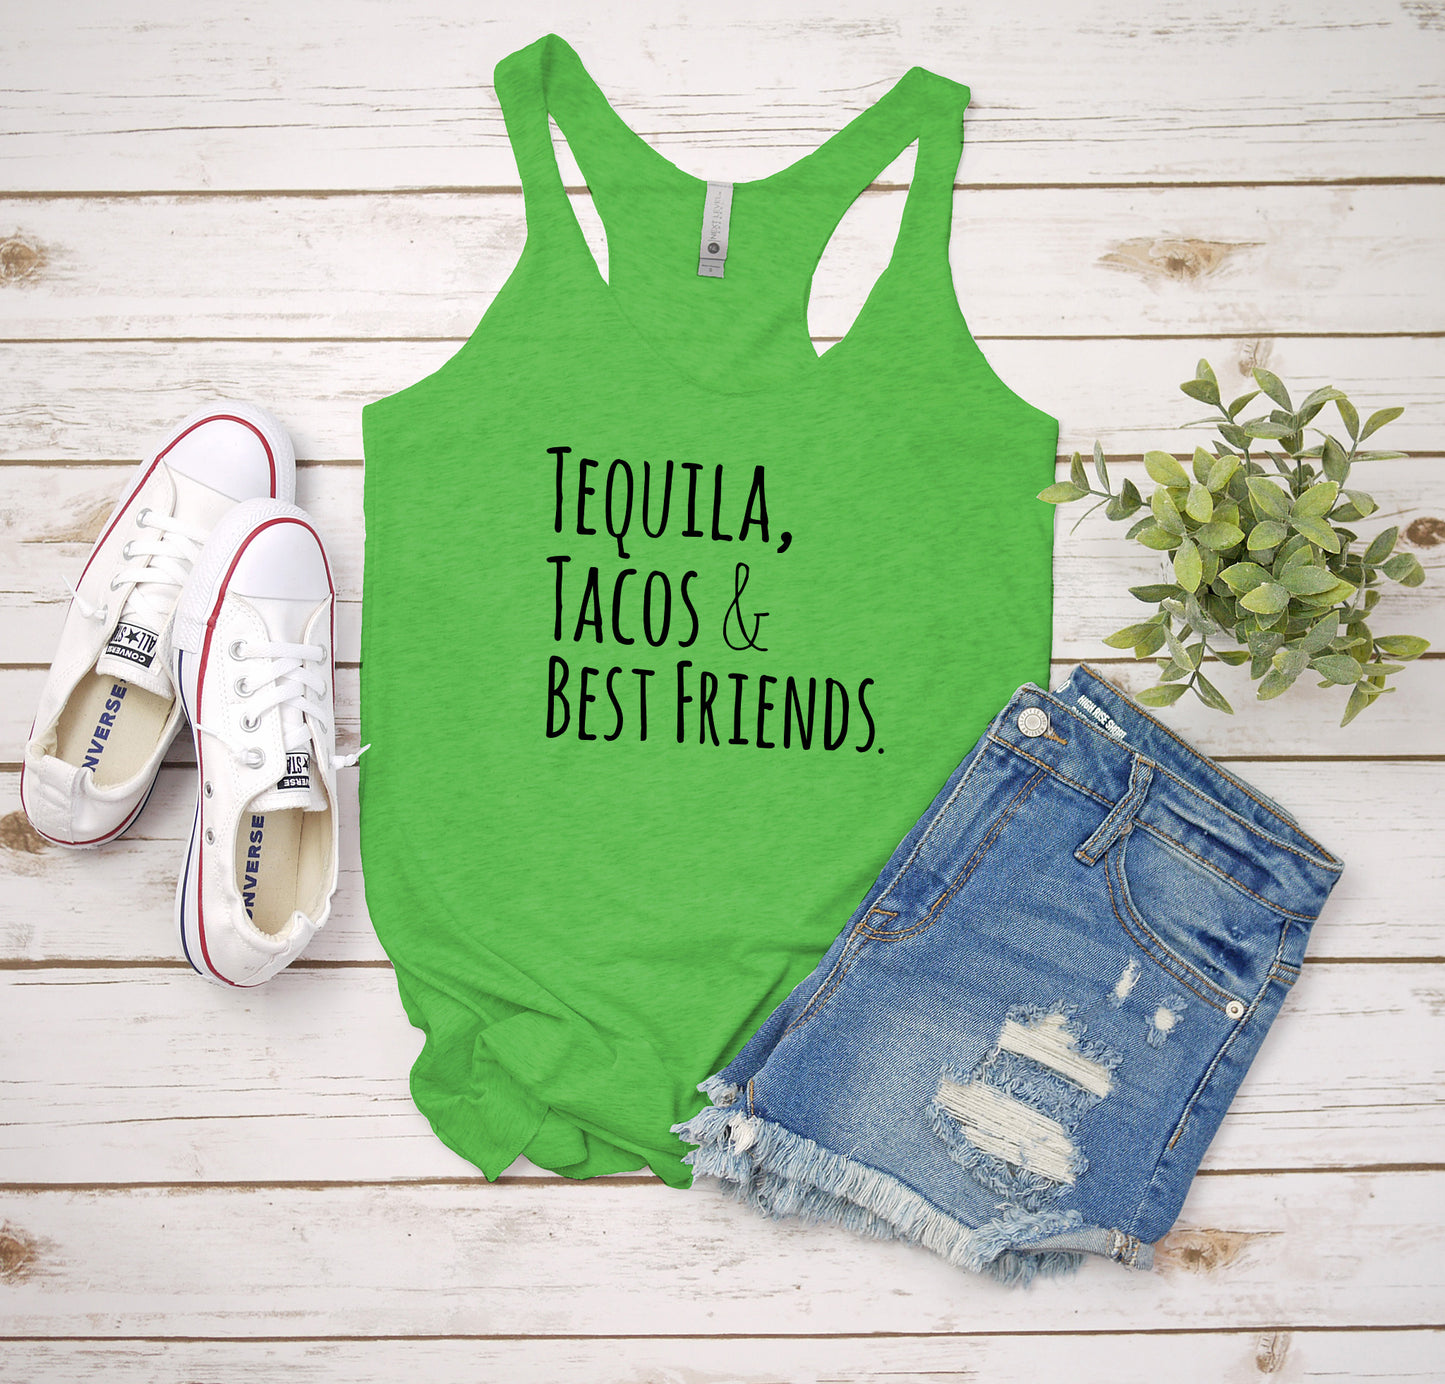 Tequila, Tacos, & Best Friends - Women's Tank - Heather Gray, Tahiti, or Envy